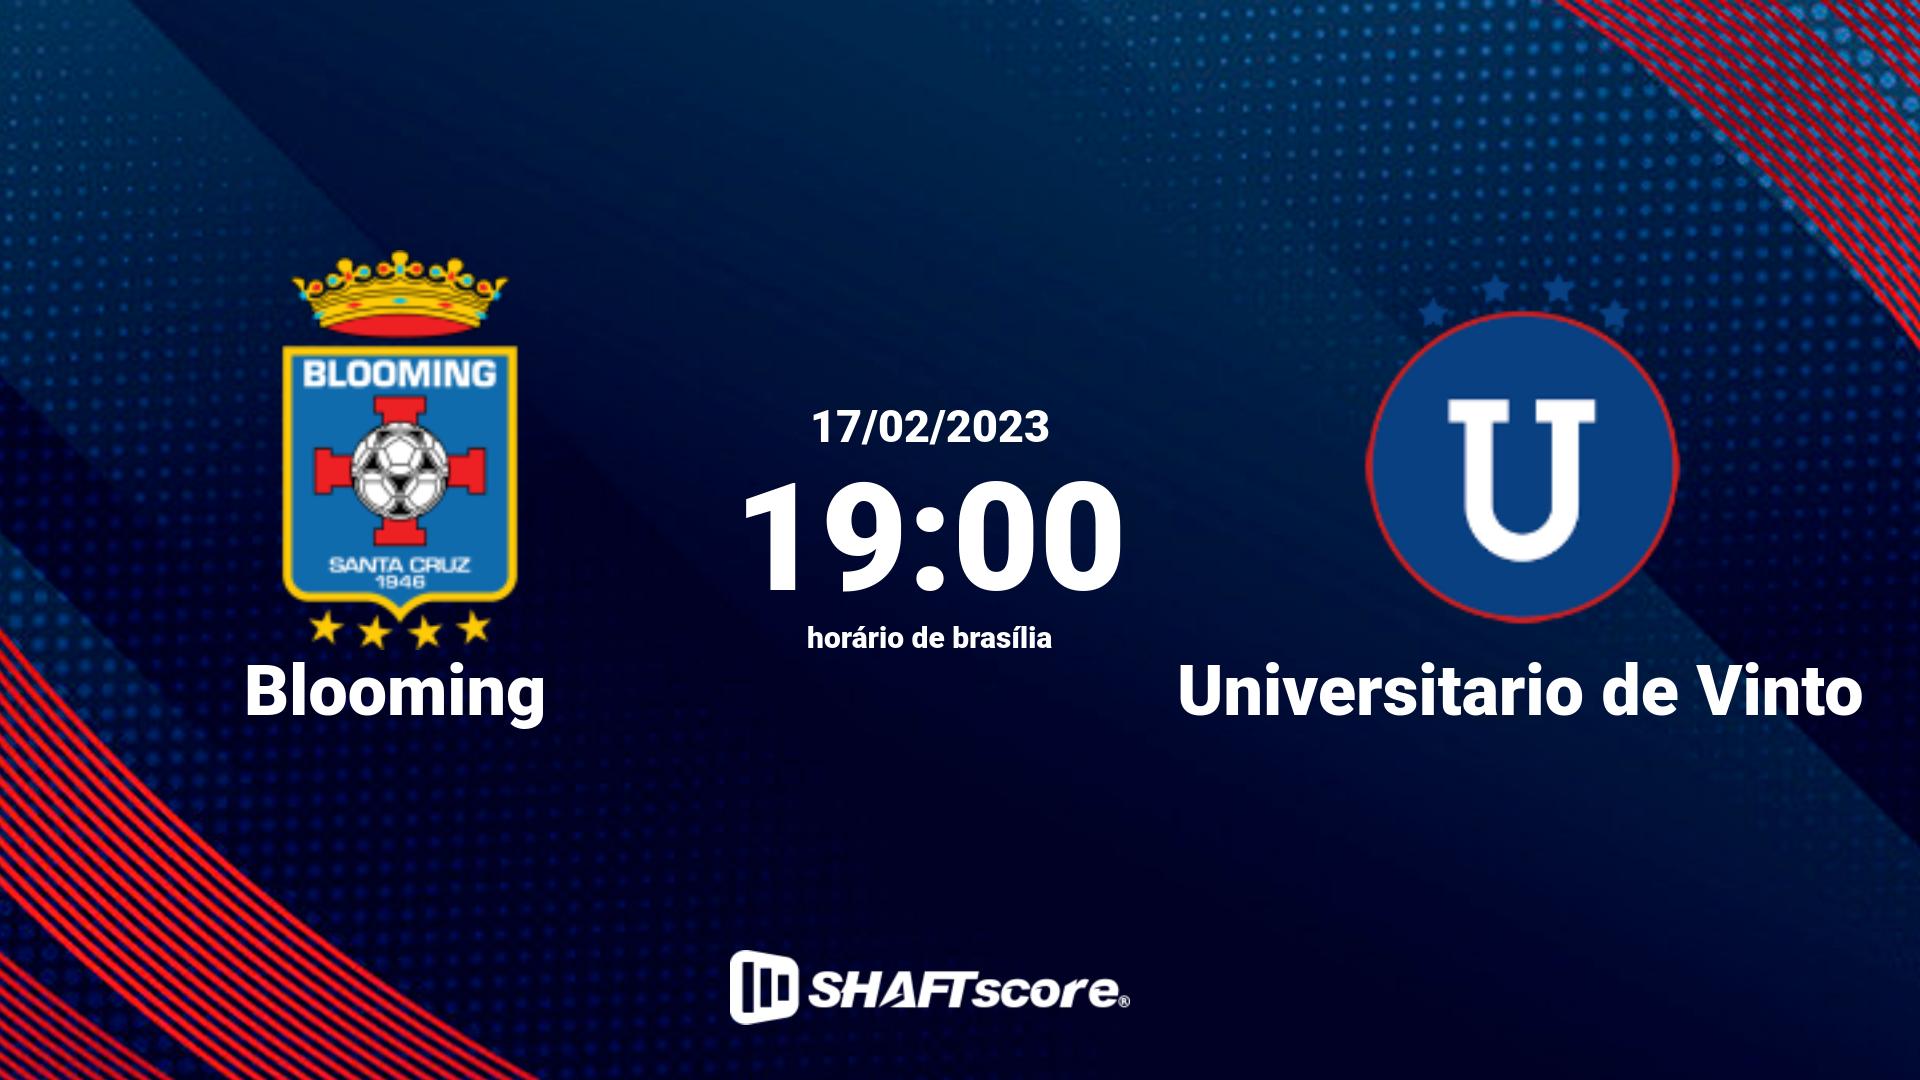 Estatísticas do jogo Blooming vs Universitario de Vinto 17.02 19:00